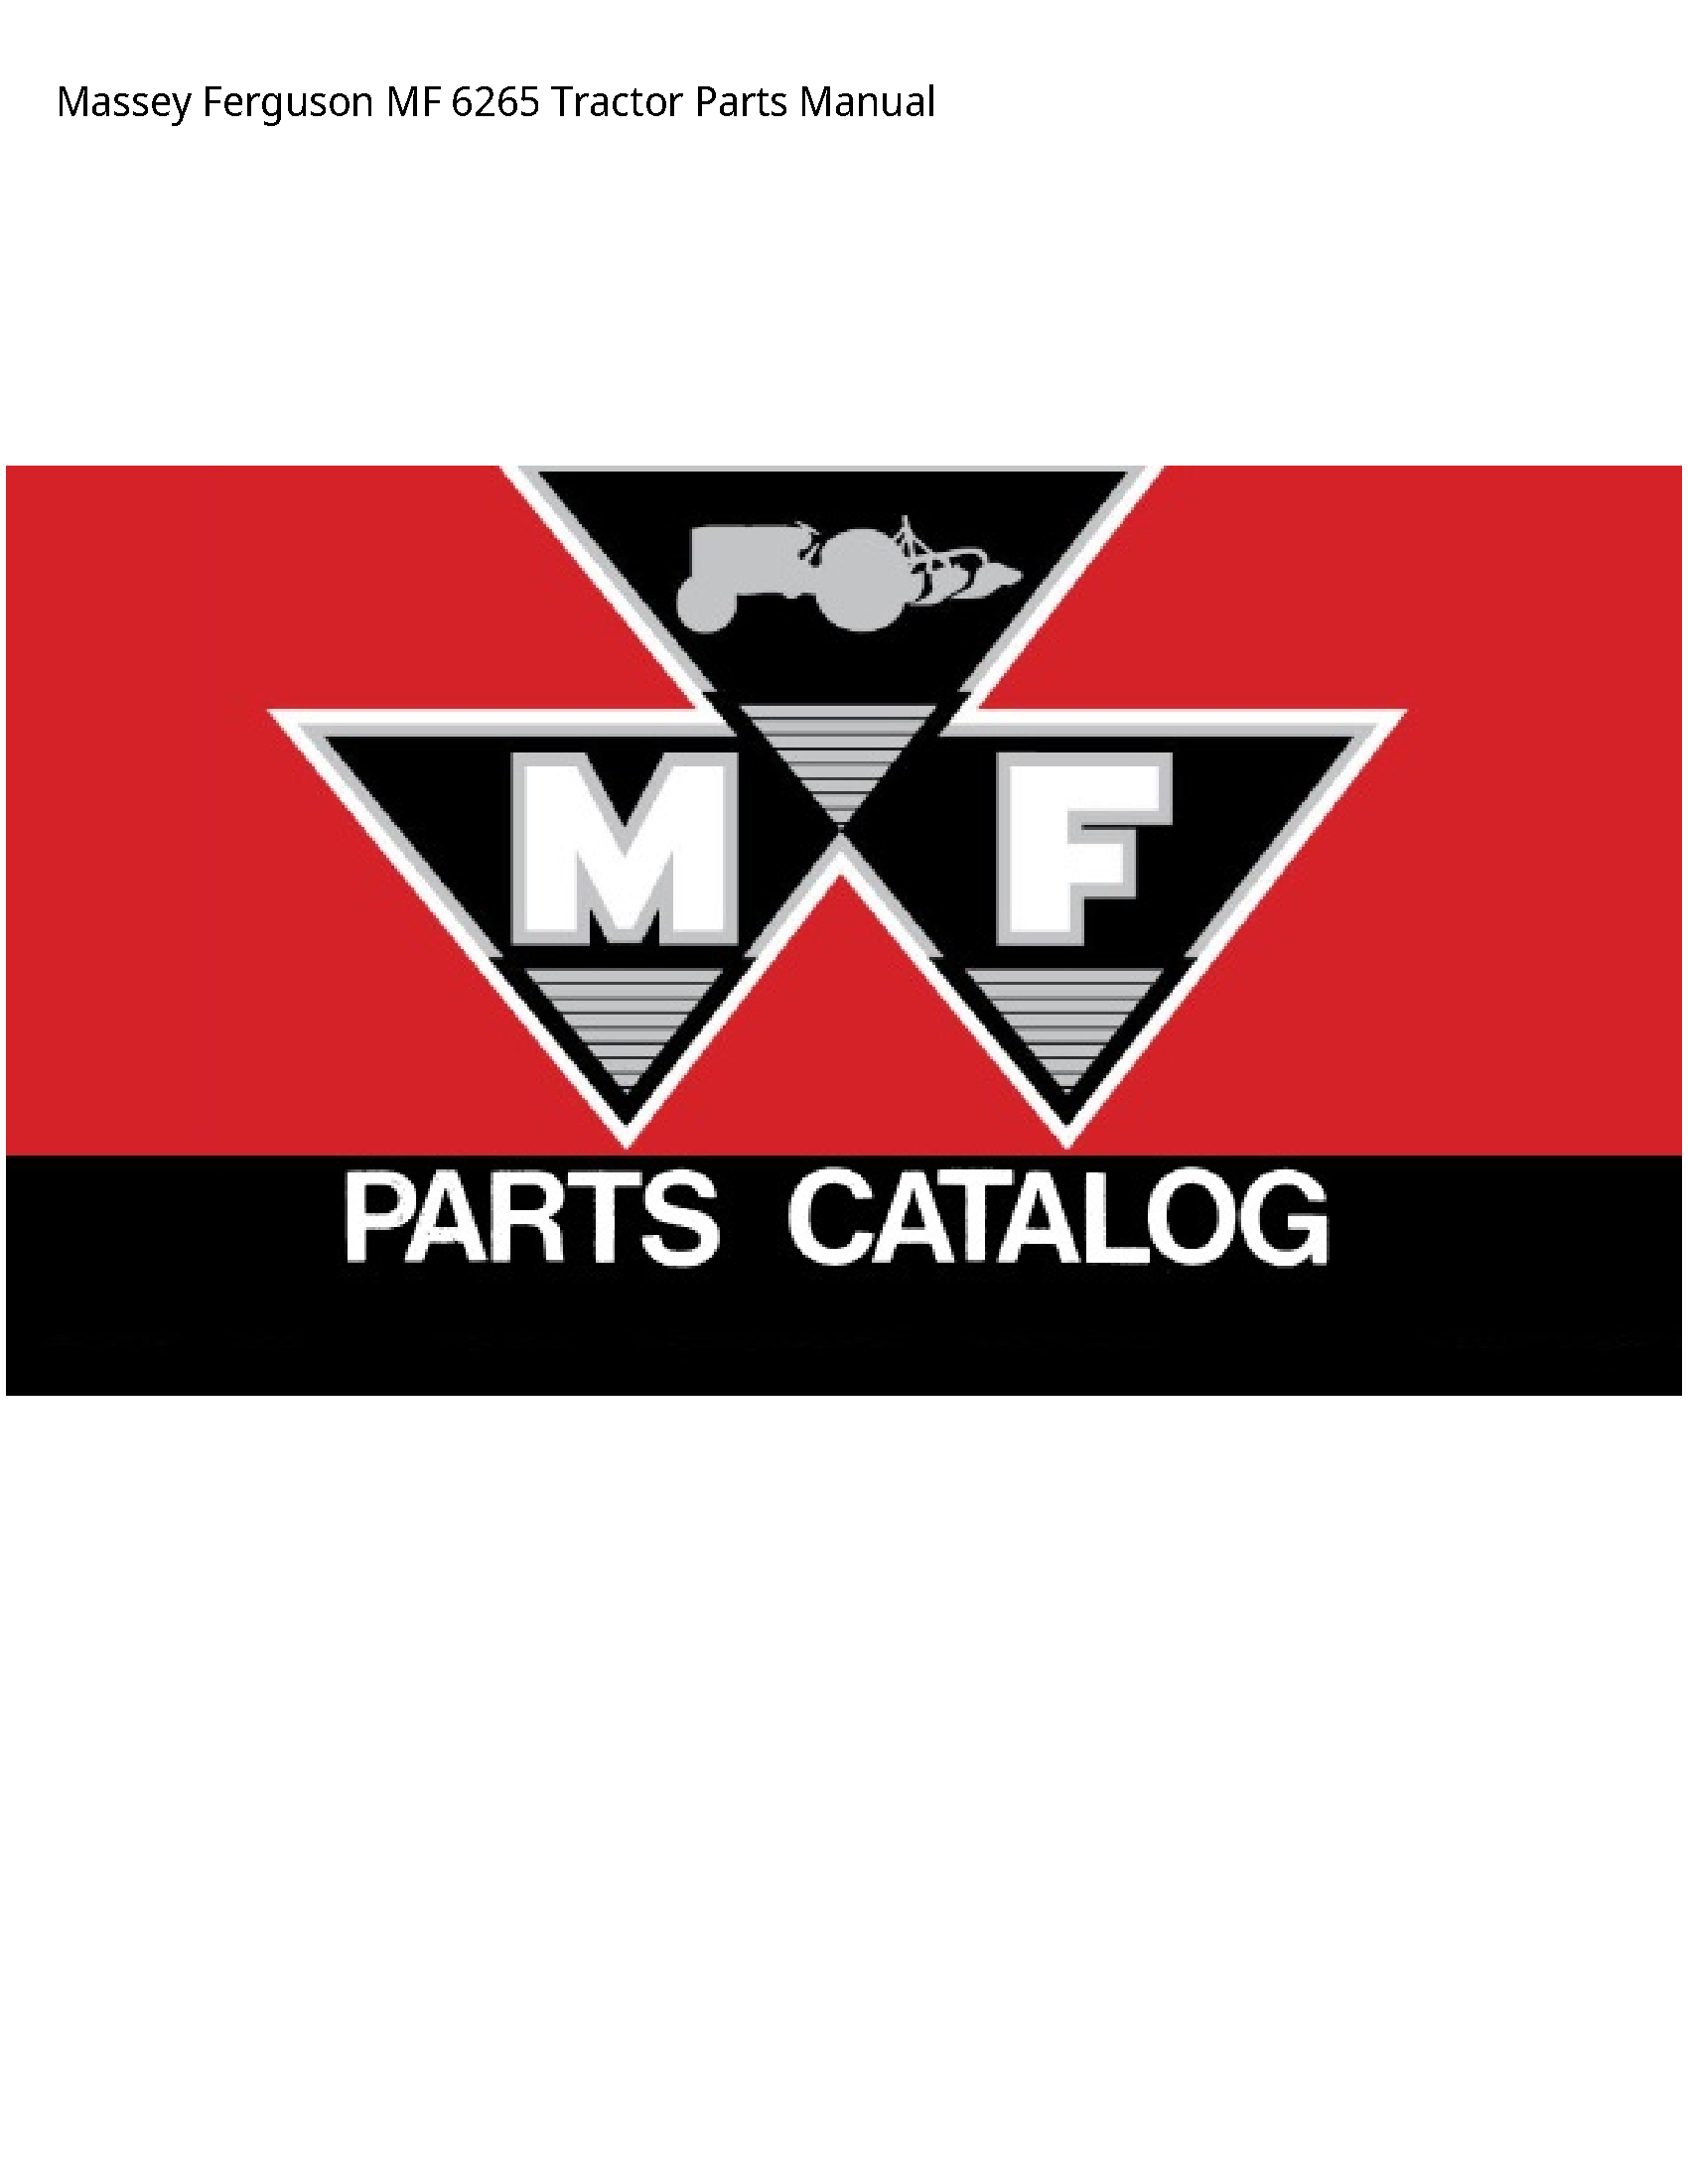 Massey Ferguson 6265 MF Tractor Parts manual